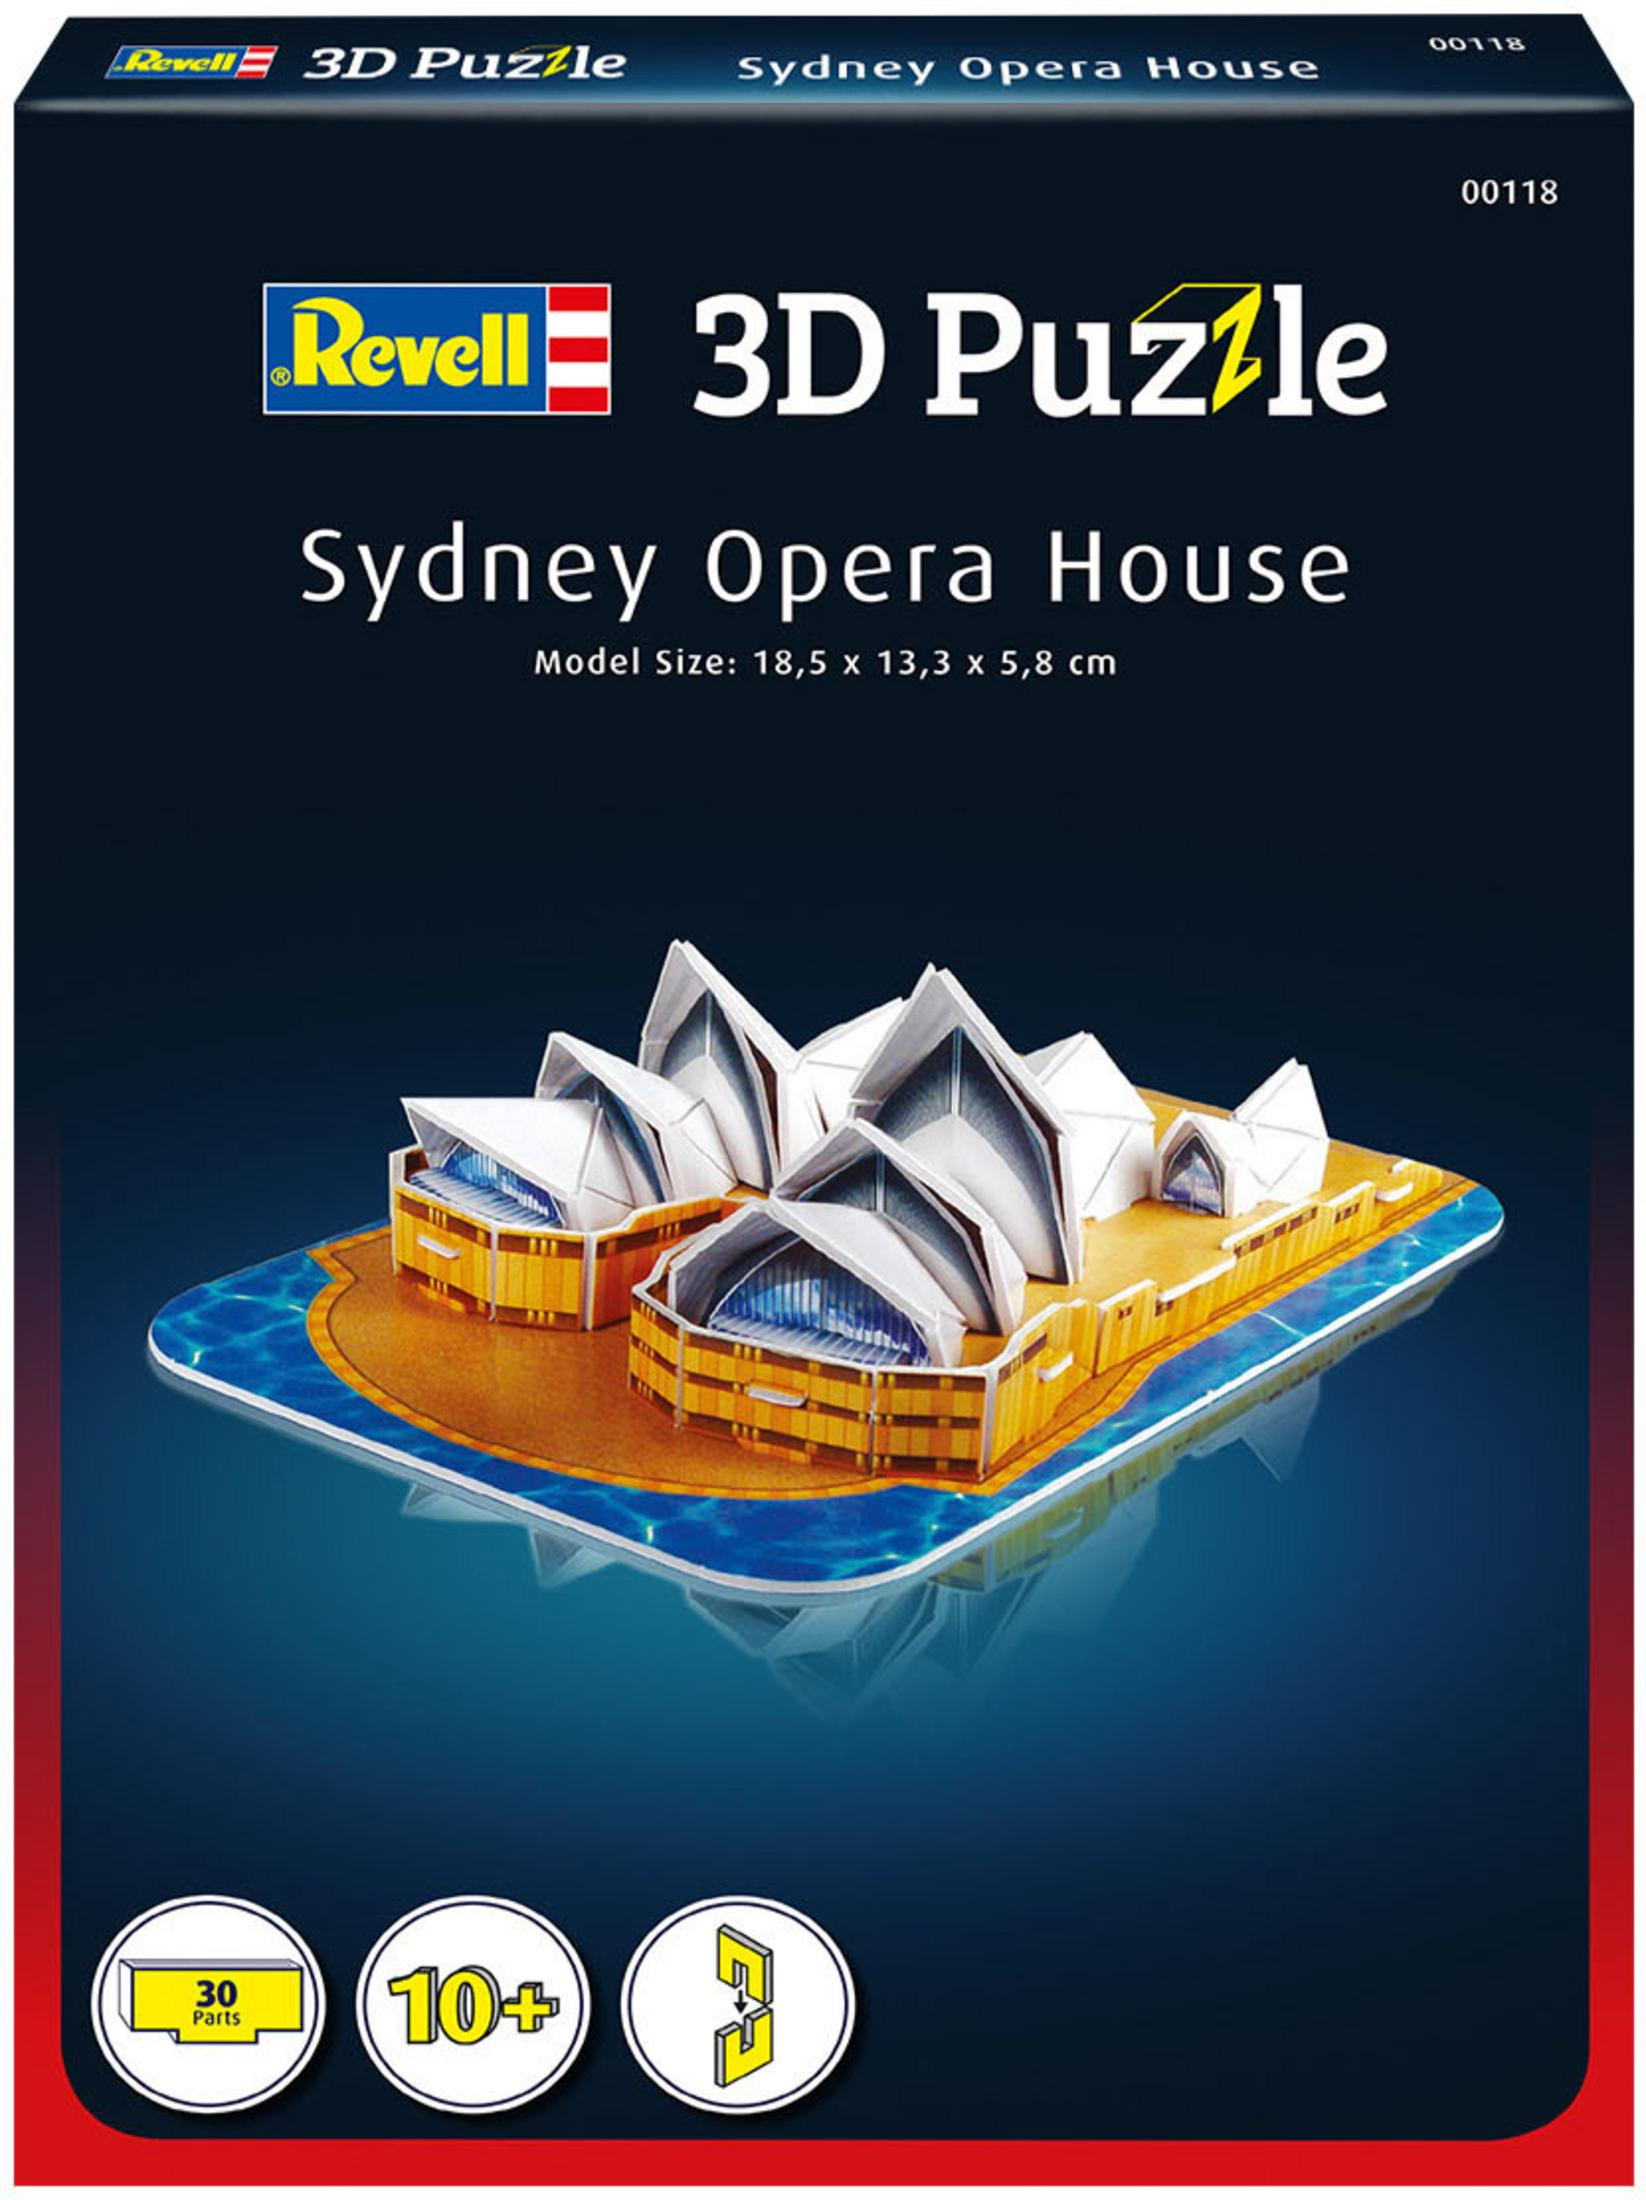 SYDNEY Mehrfarbig 3D Puzzle OPER 00118 REVELL